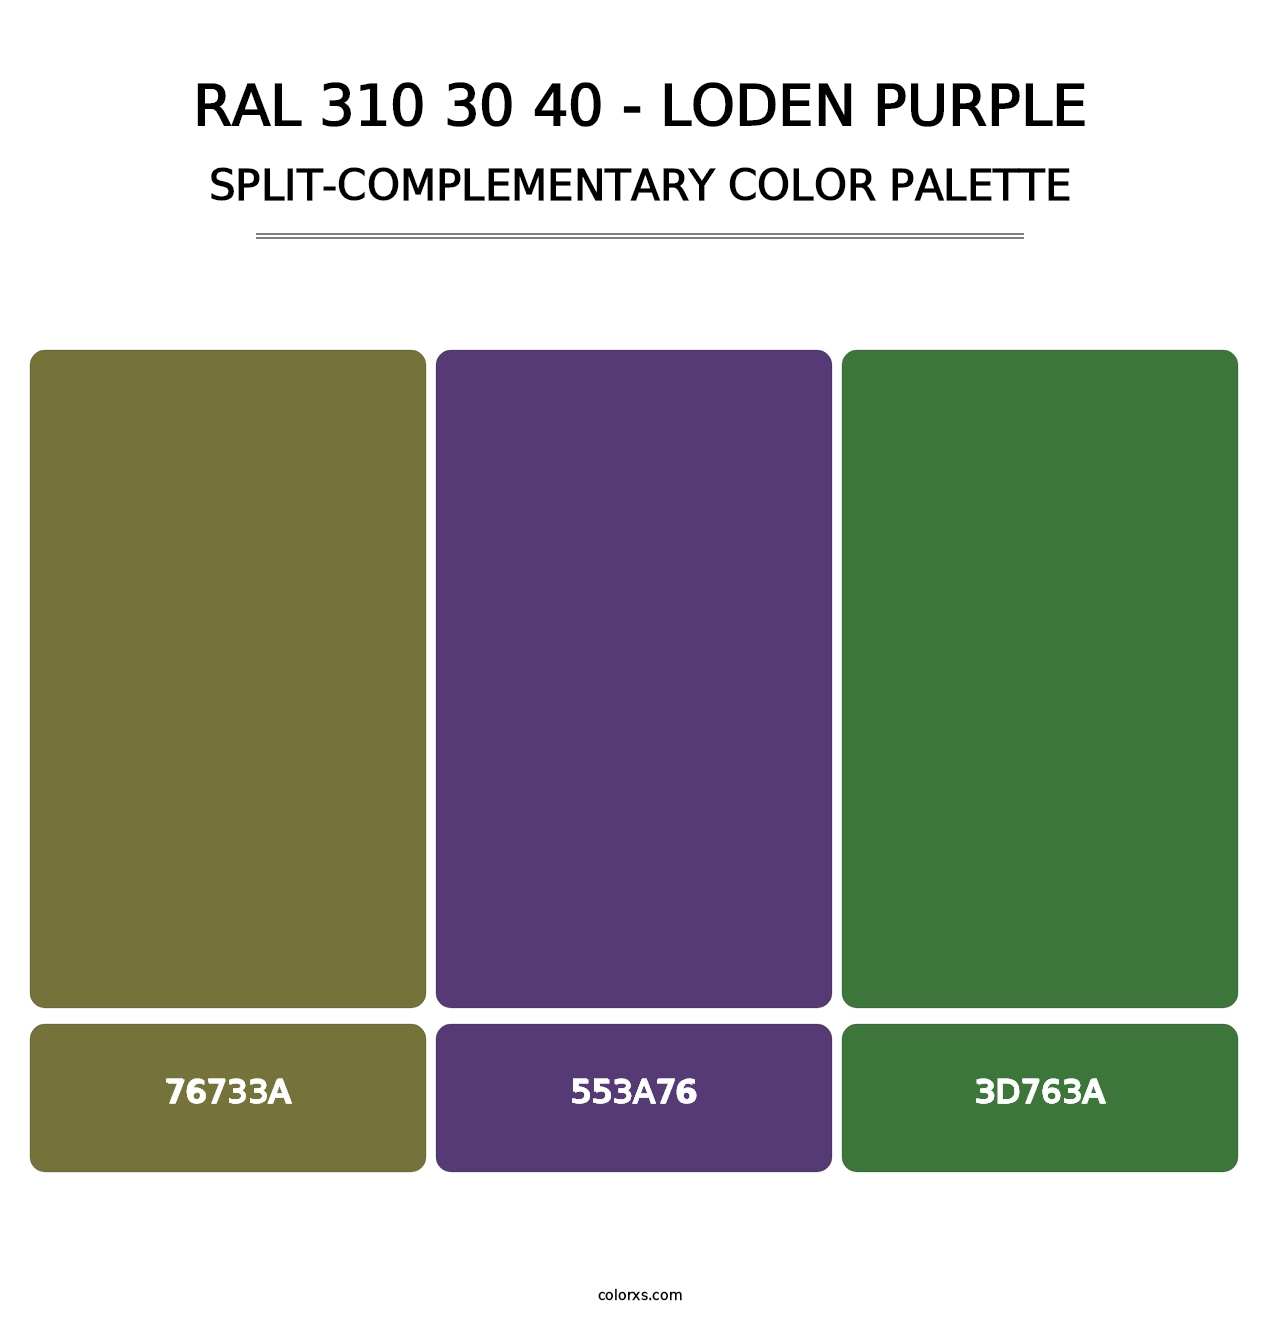 RAL 310 30 40 - Loden Purple - Split-Complementary Color Palette